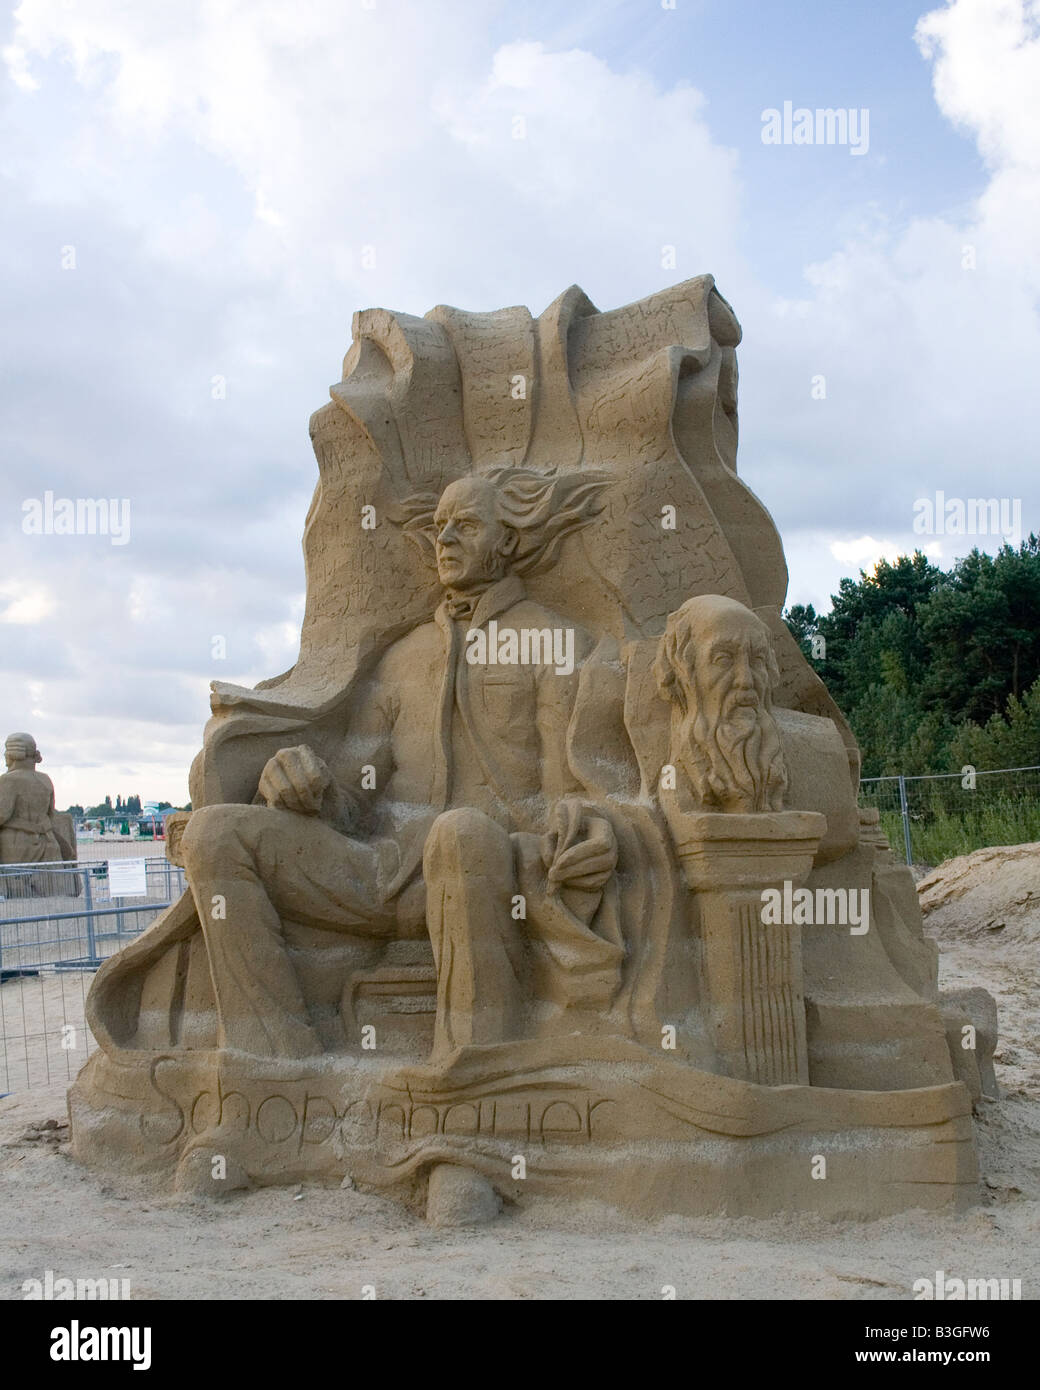 The sand sculpture of Artur Schopenhauer 1788-1860 Stock Photo